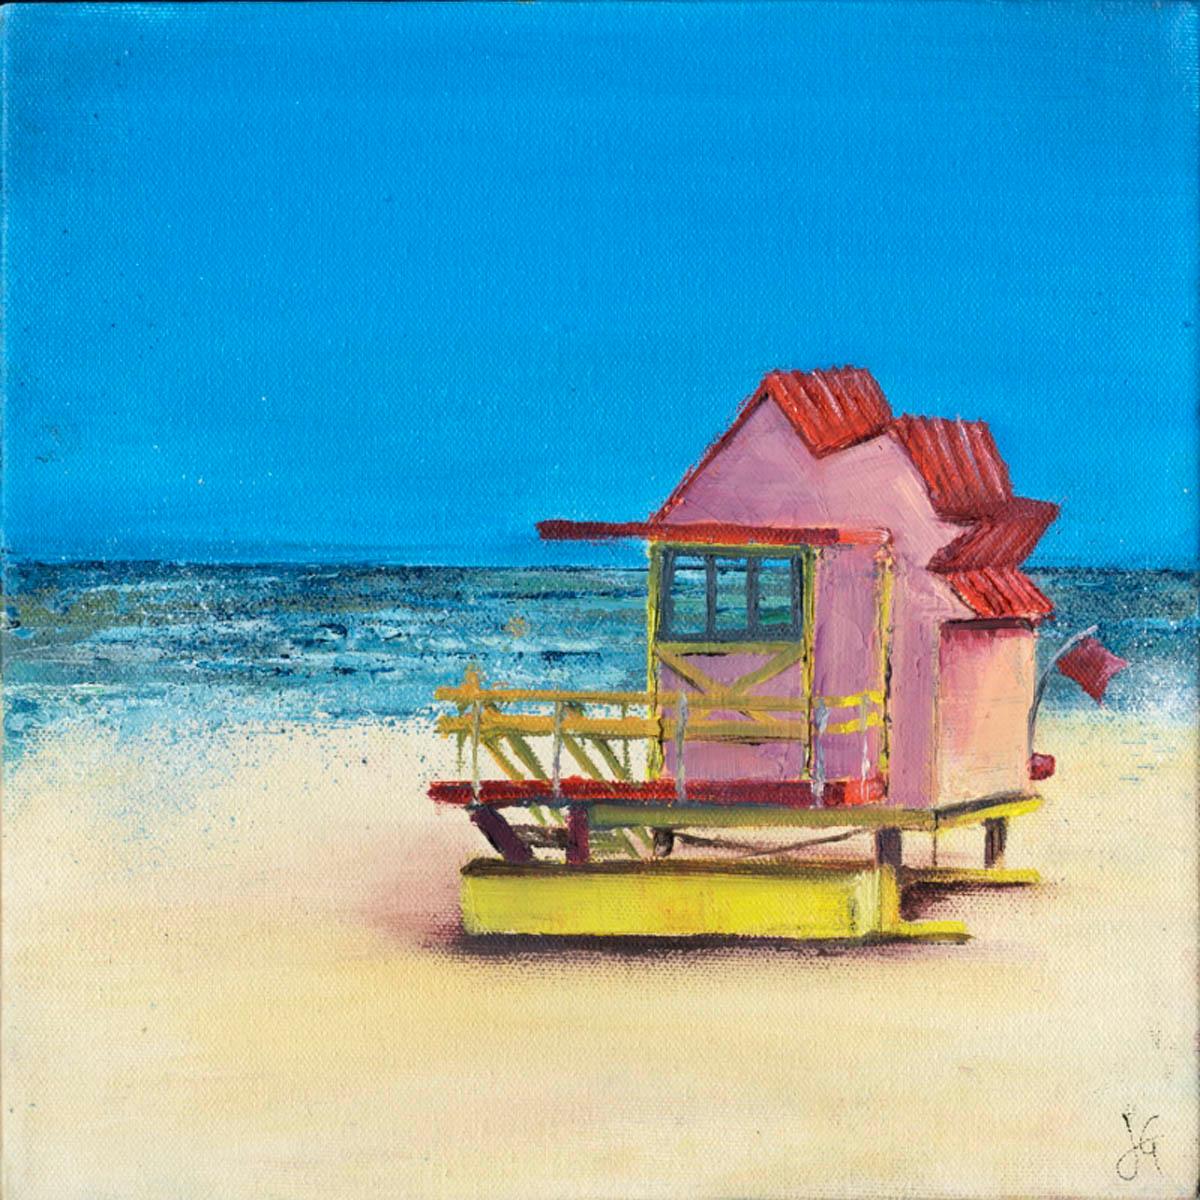 Janette George Landscape Painting - Beach Hut – Pink BY JANETTE GEORGE, Seaside Art for Sale, Affordable OriginalArt